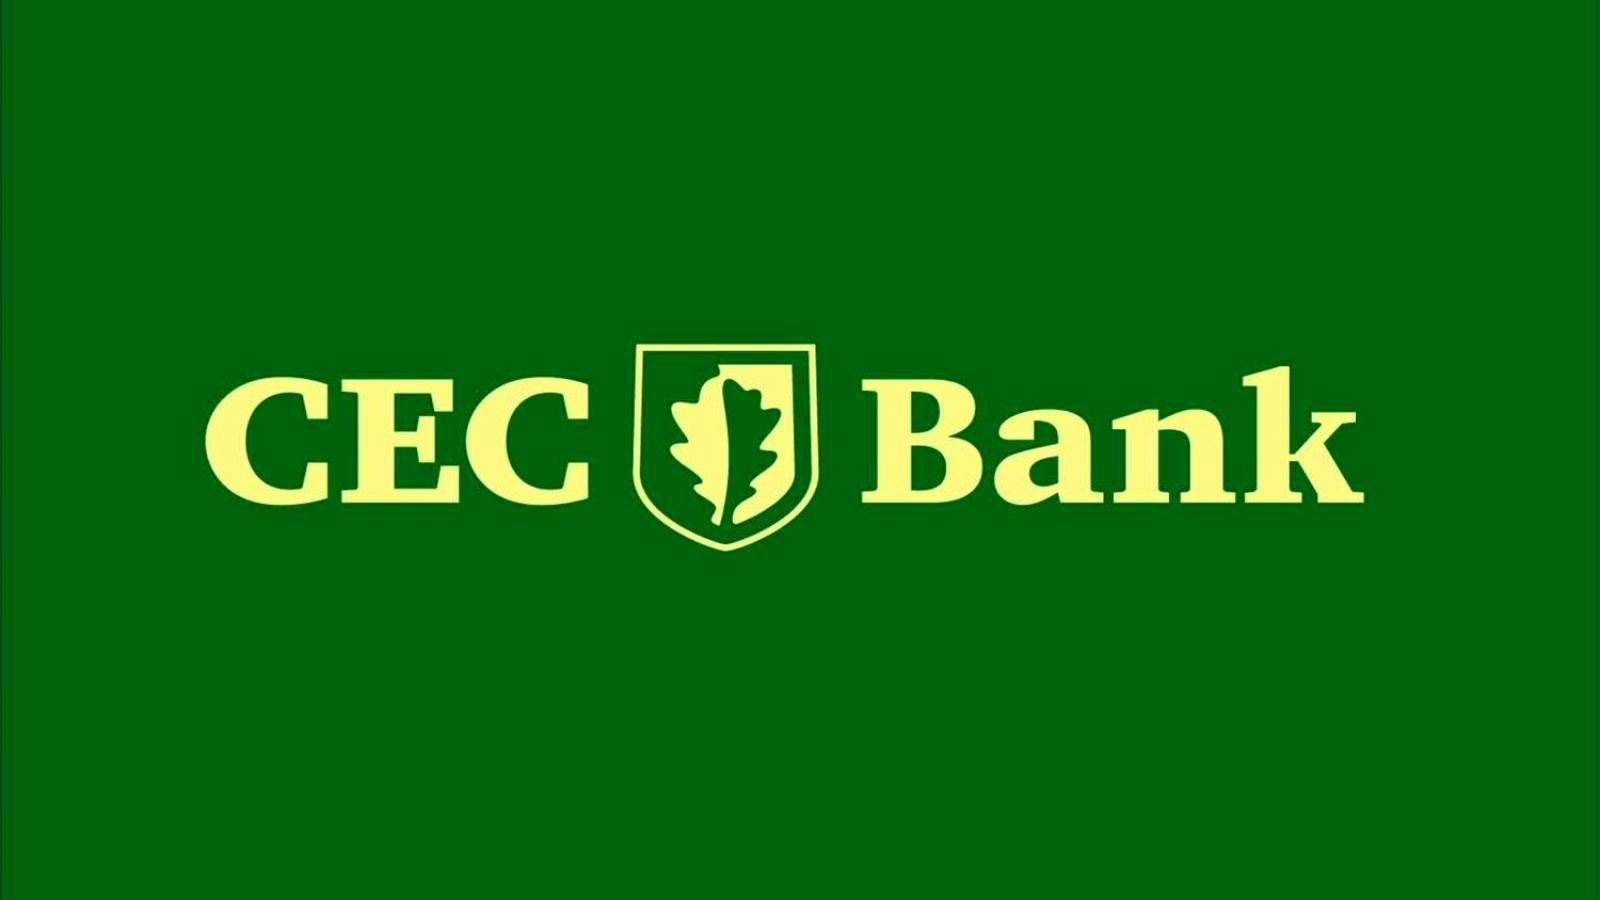 CEC Bank Anuntul ULTIM MOMENT Decizia Clienti